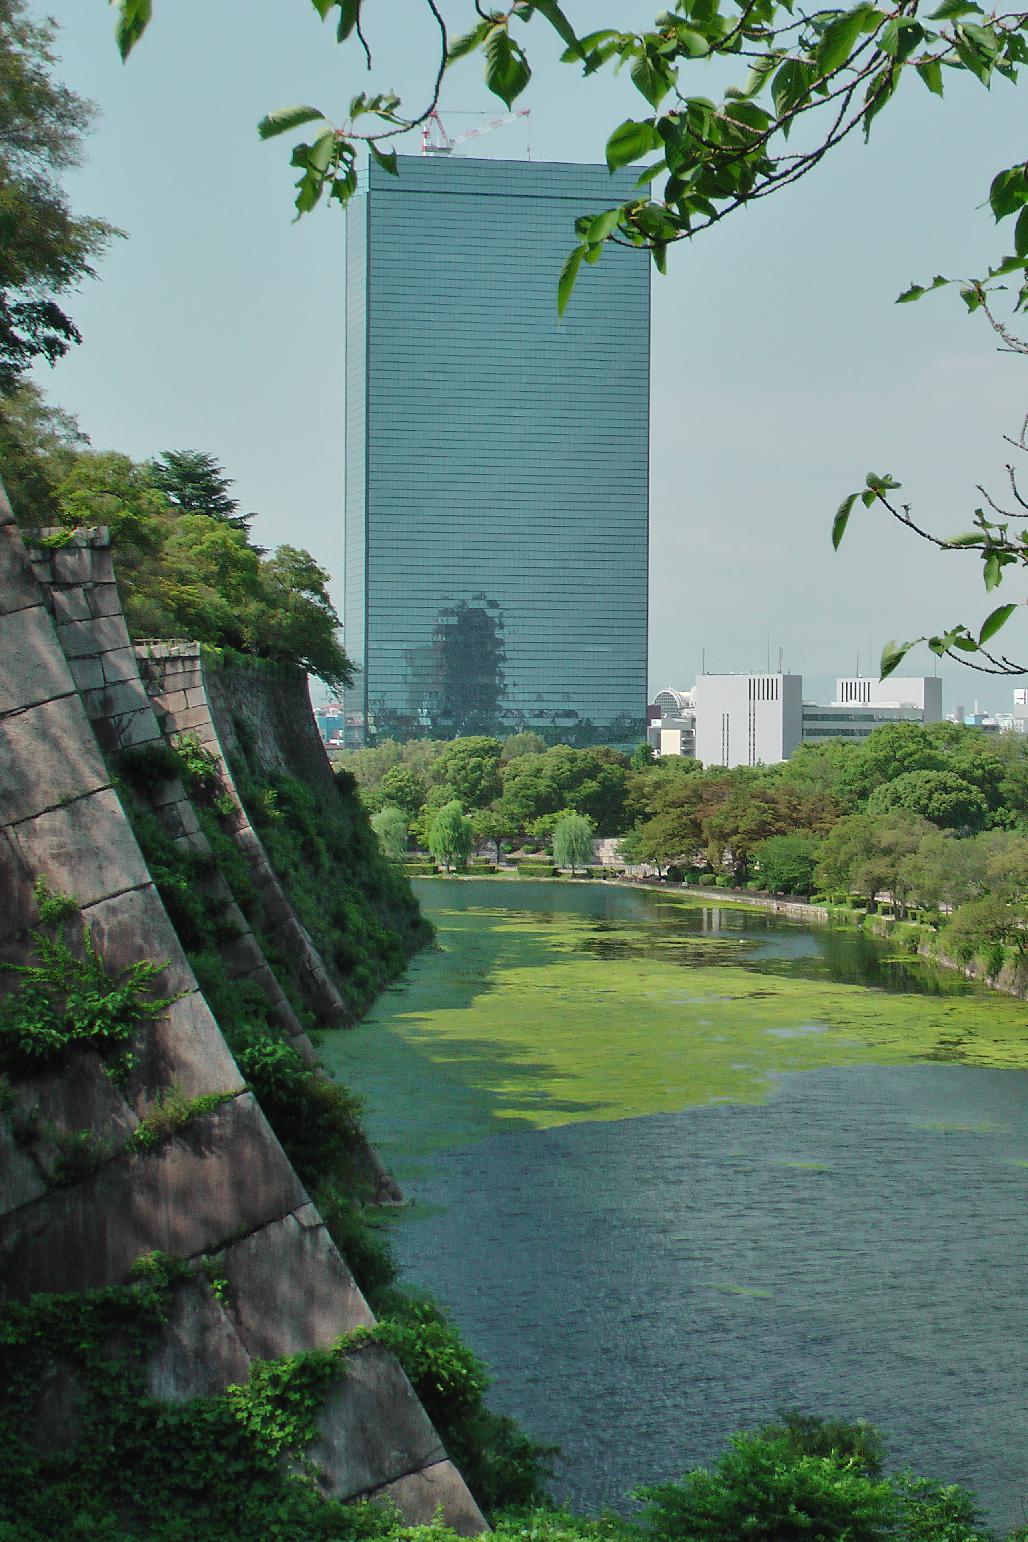 The castle ditch of Osaka's castle